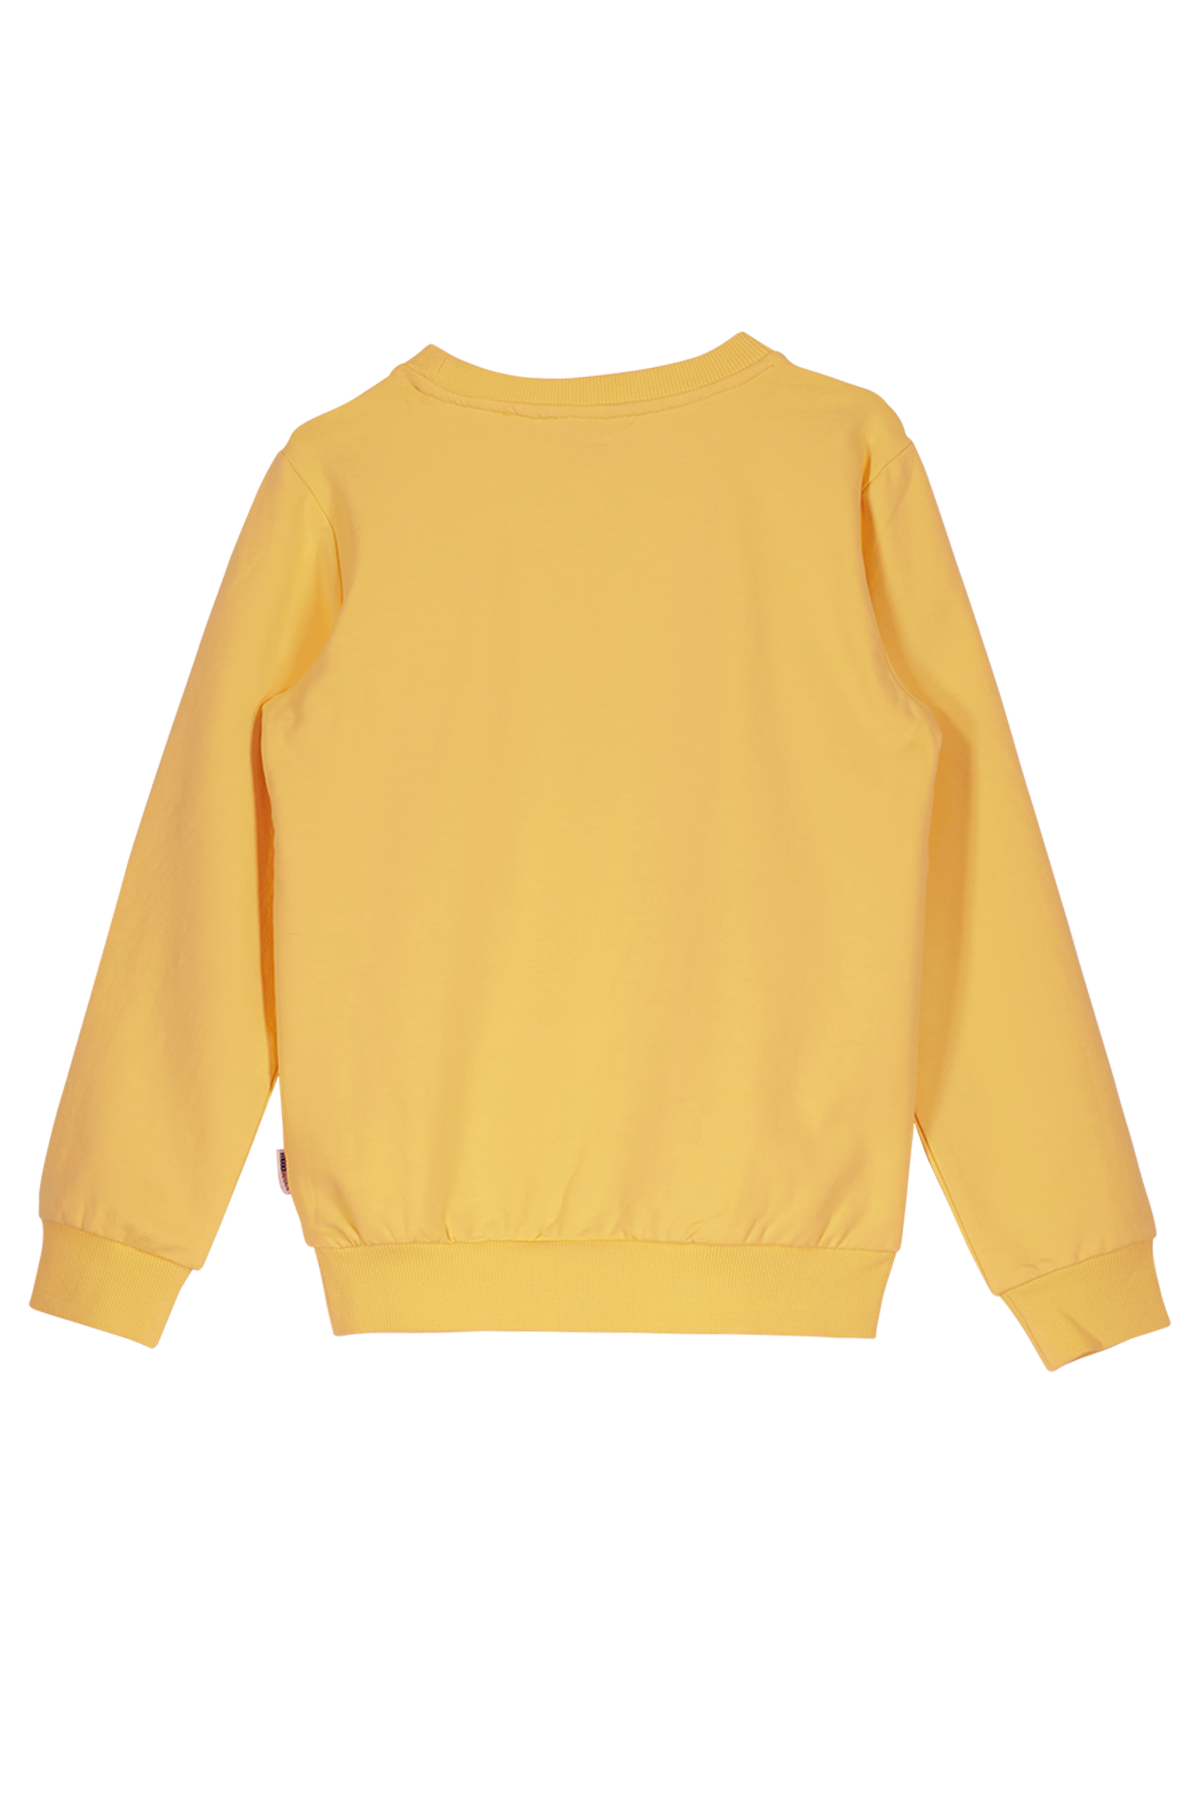 Trui / Sweater Boys sunshine sweater